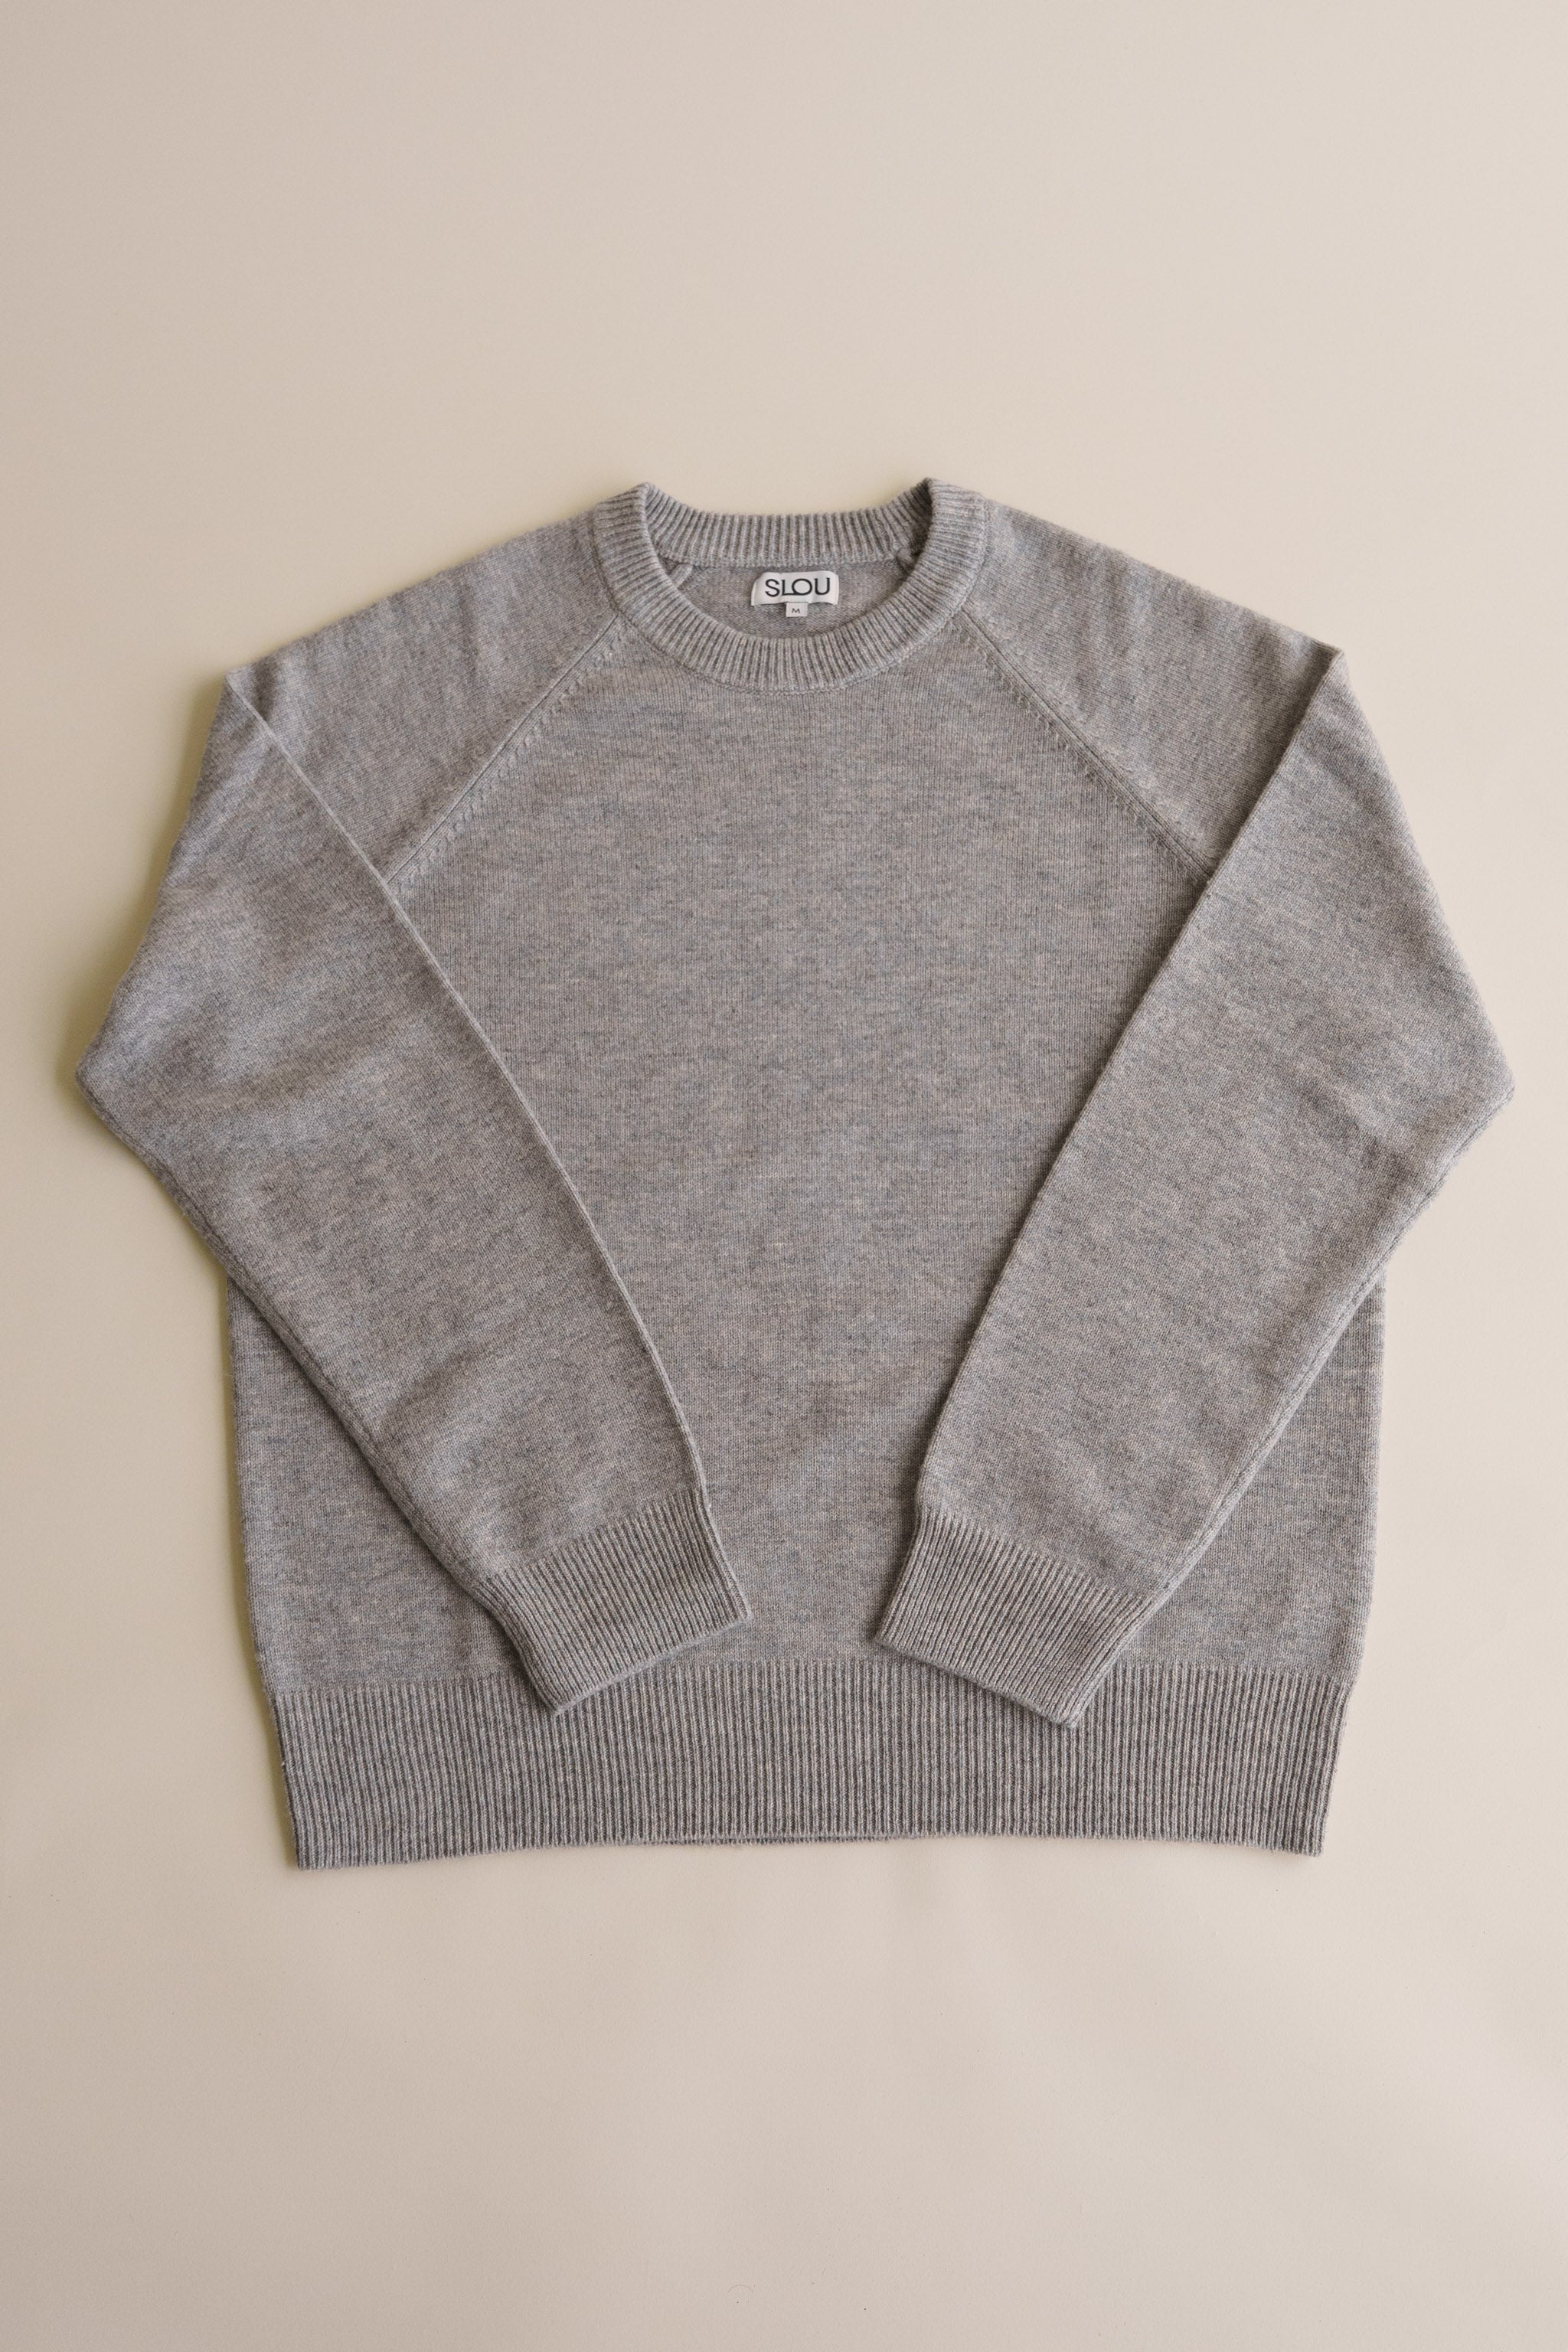 Raglan Merino Wool Sweater - SLOU